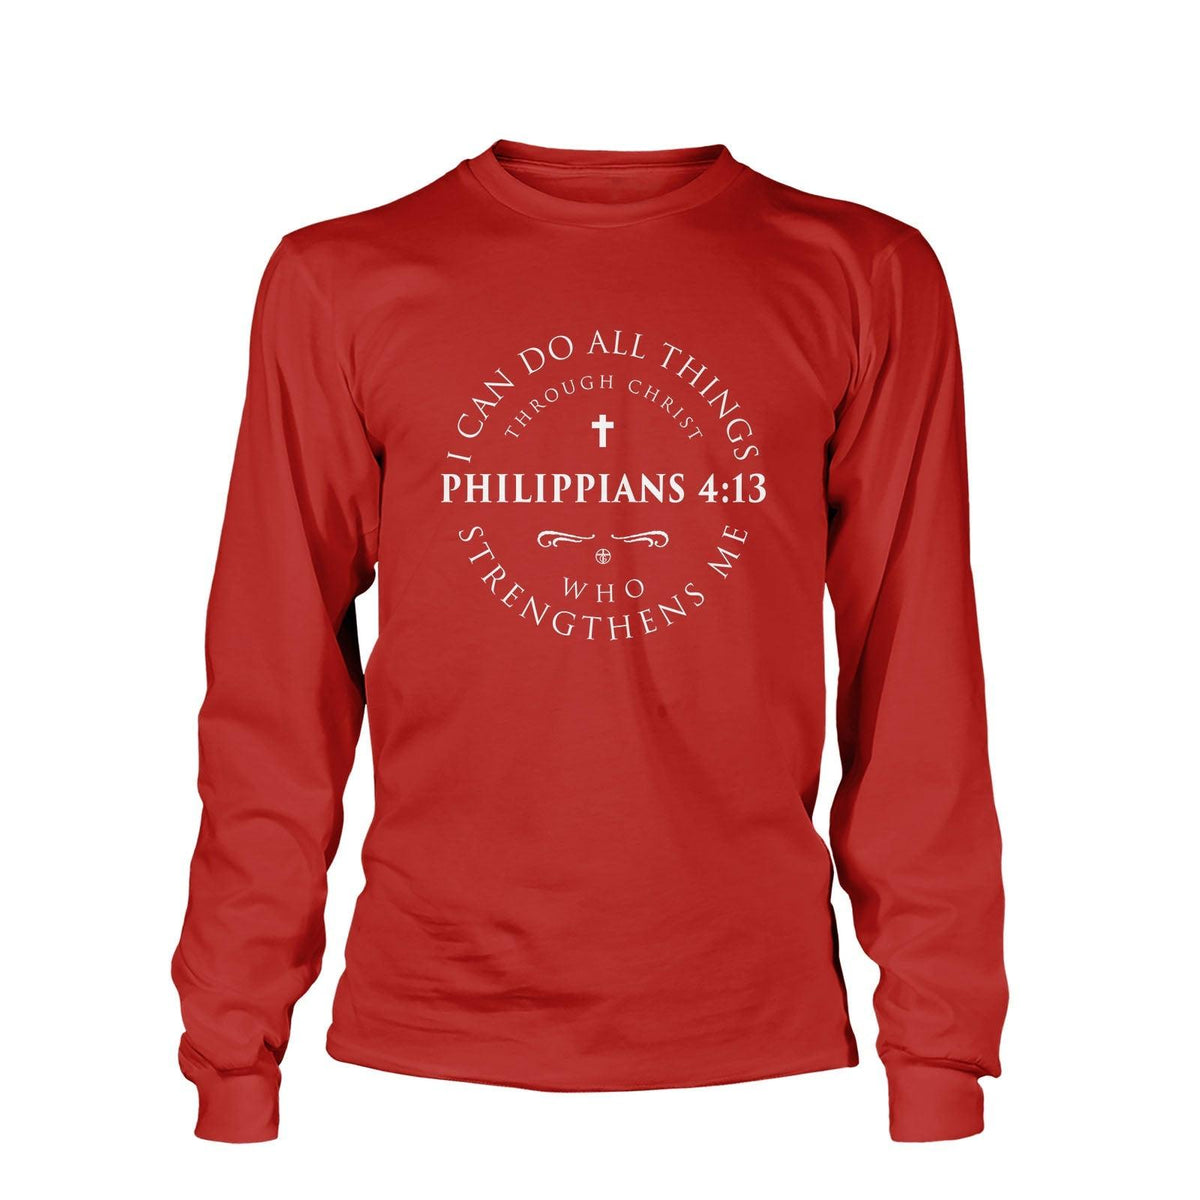 Philippians 4:13 Long Sleeve T-Shirt - Our True God